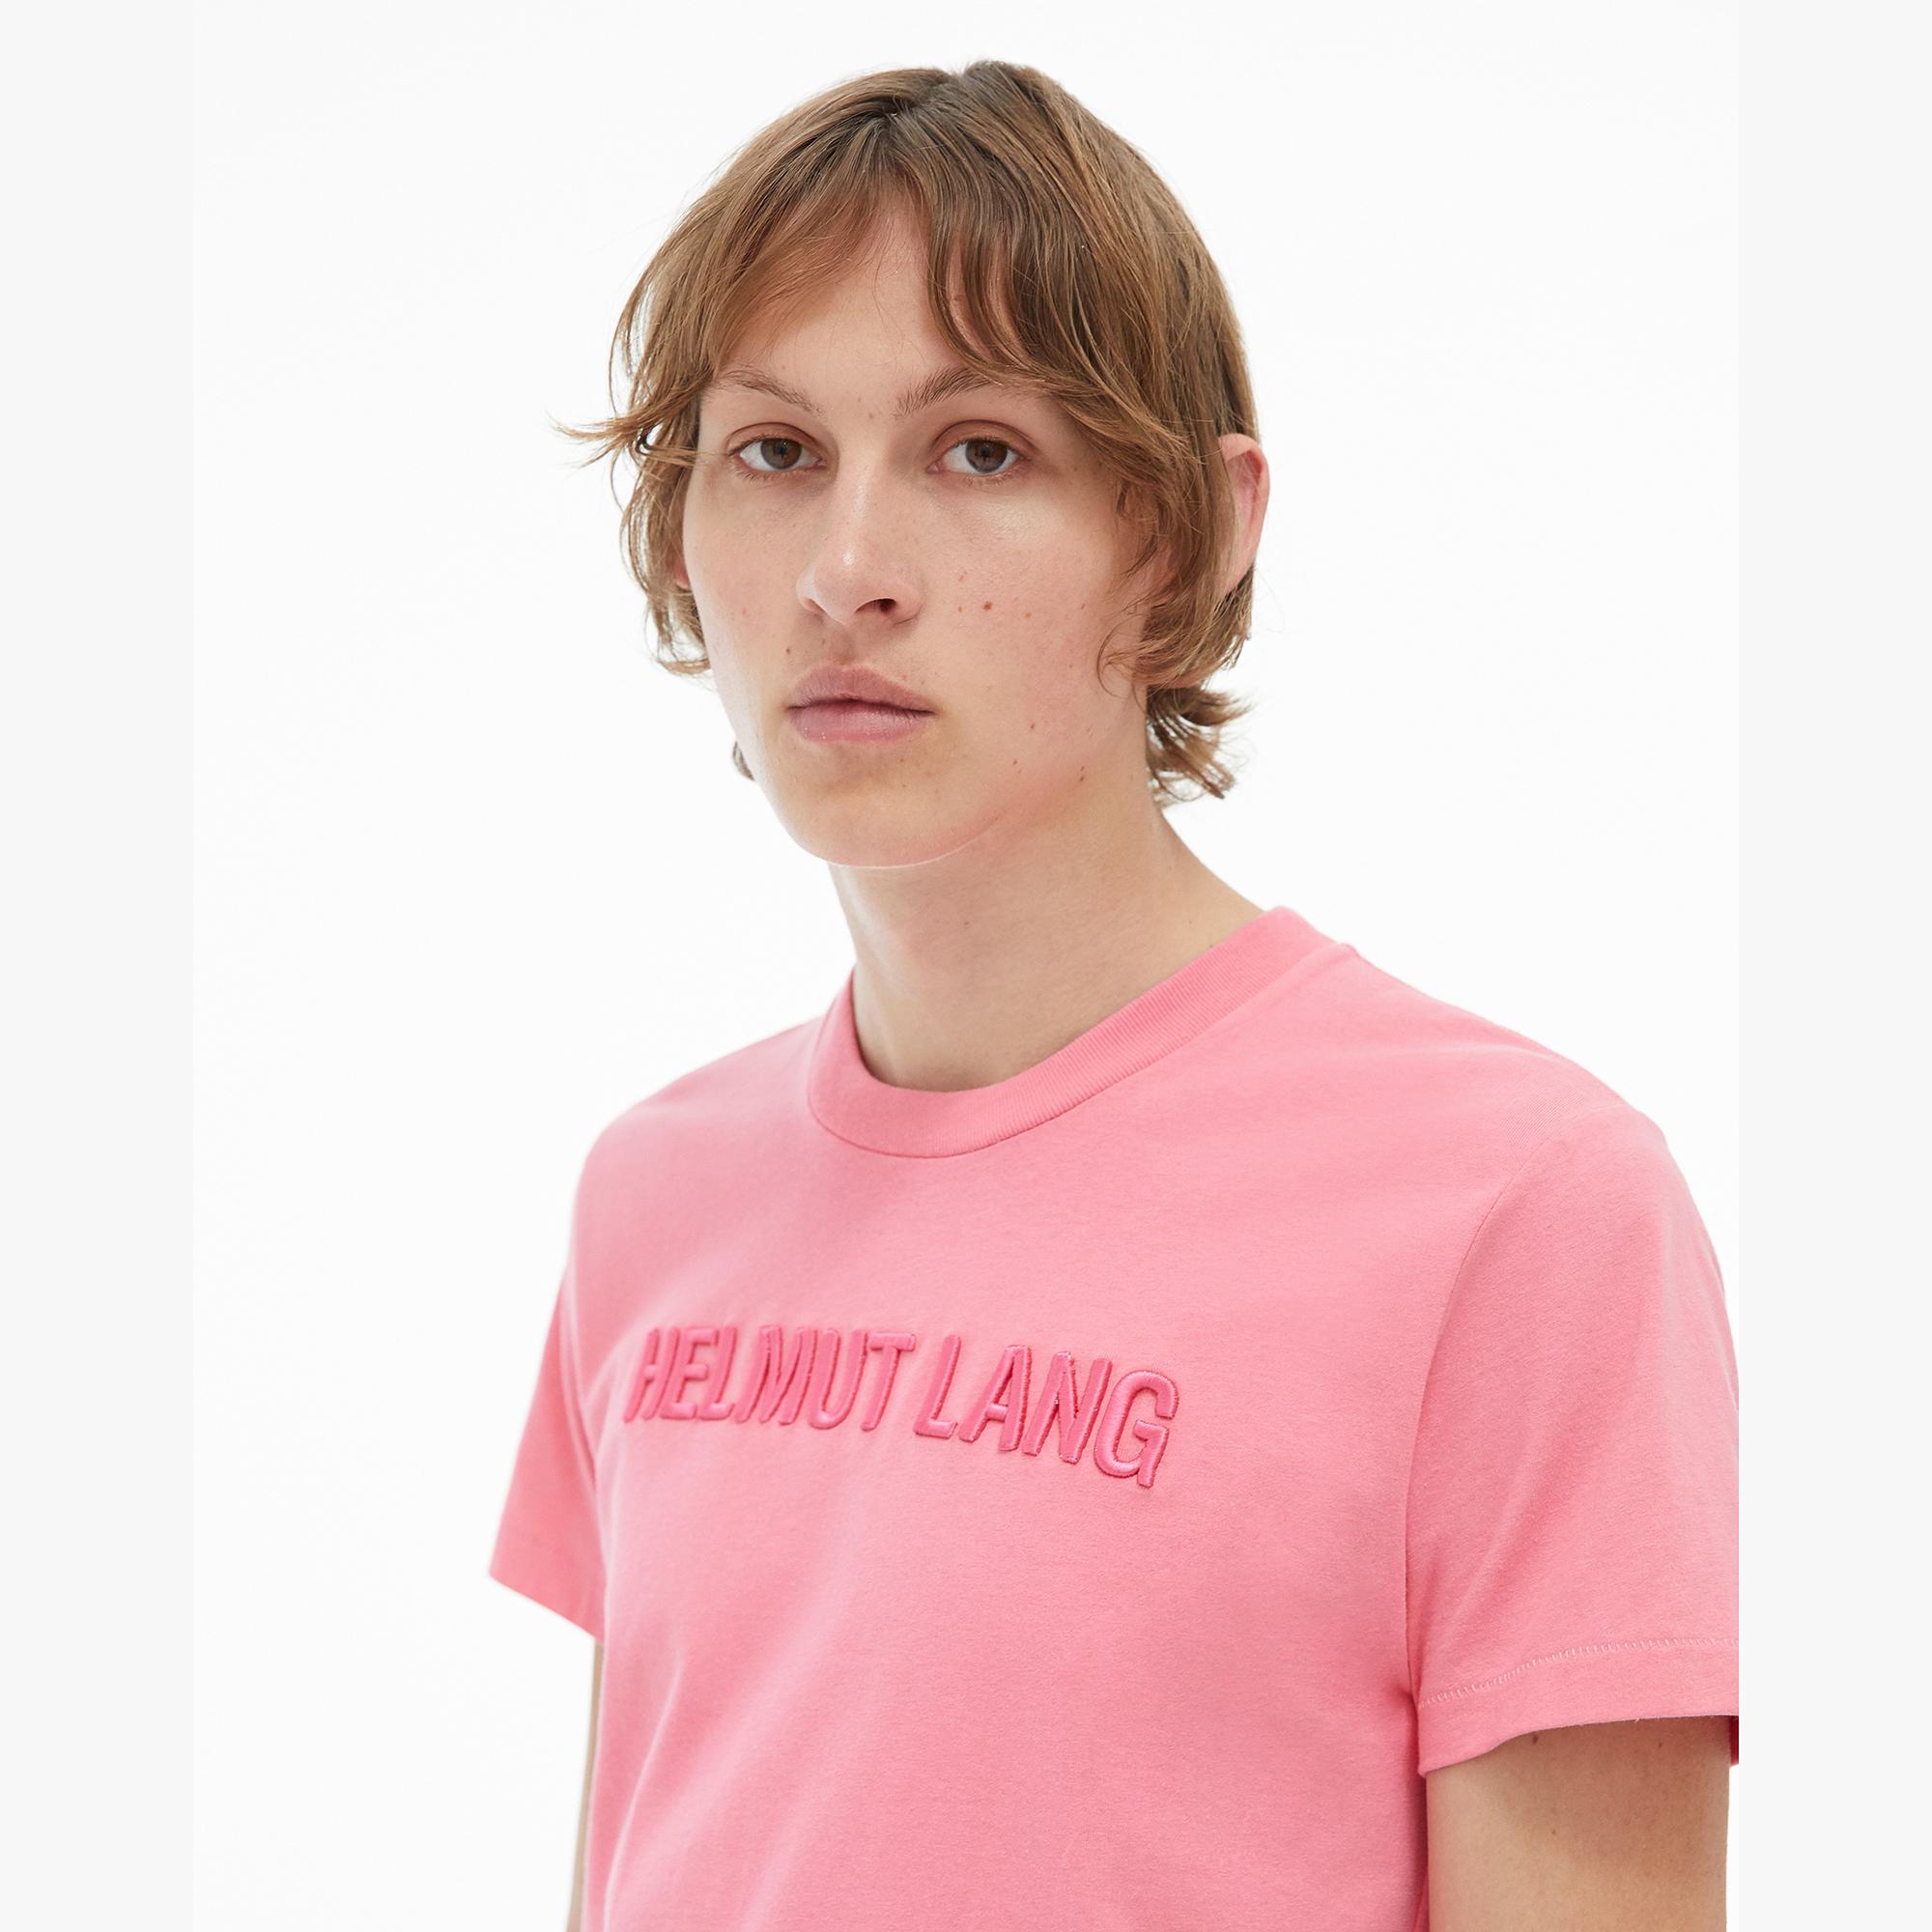 Helmut Lang Standard T-Shirt | WWW.HELMUTLANG.COM